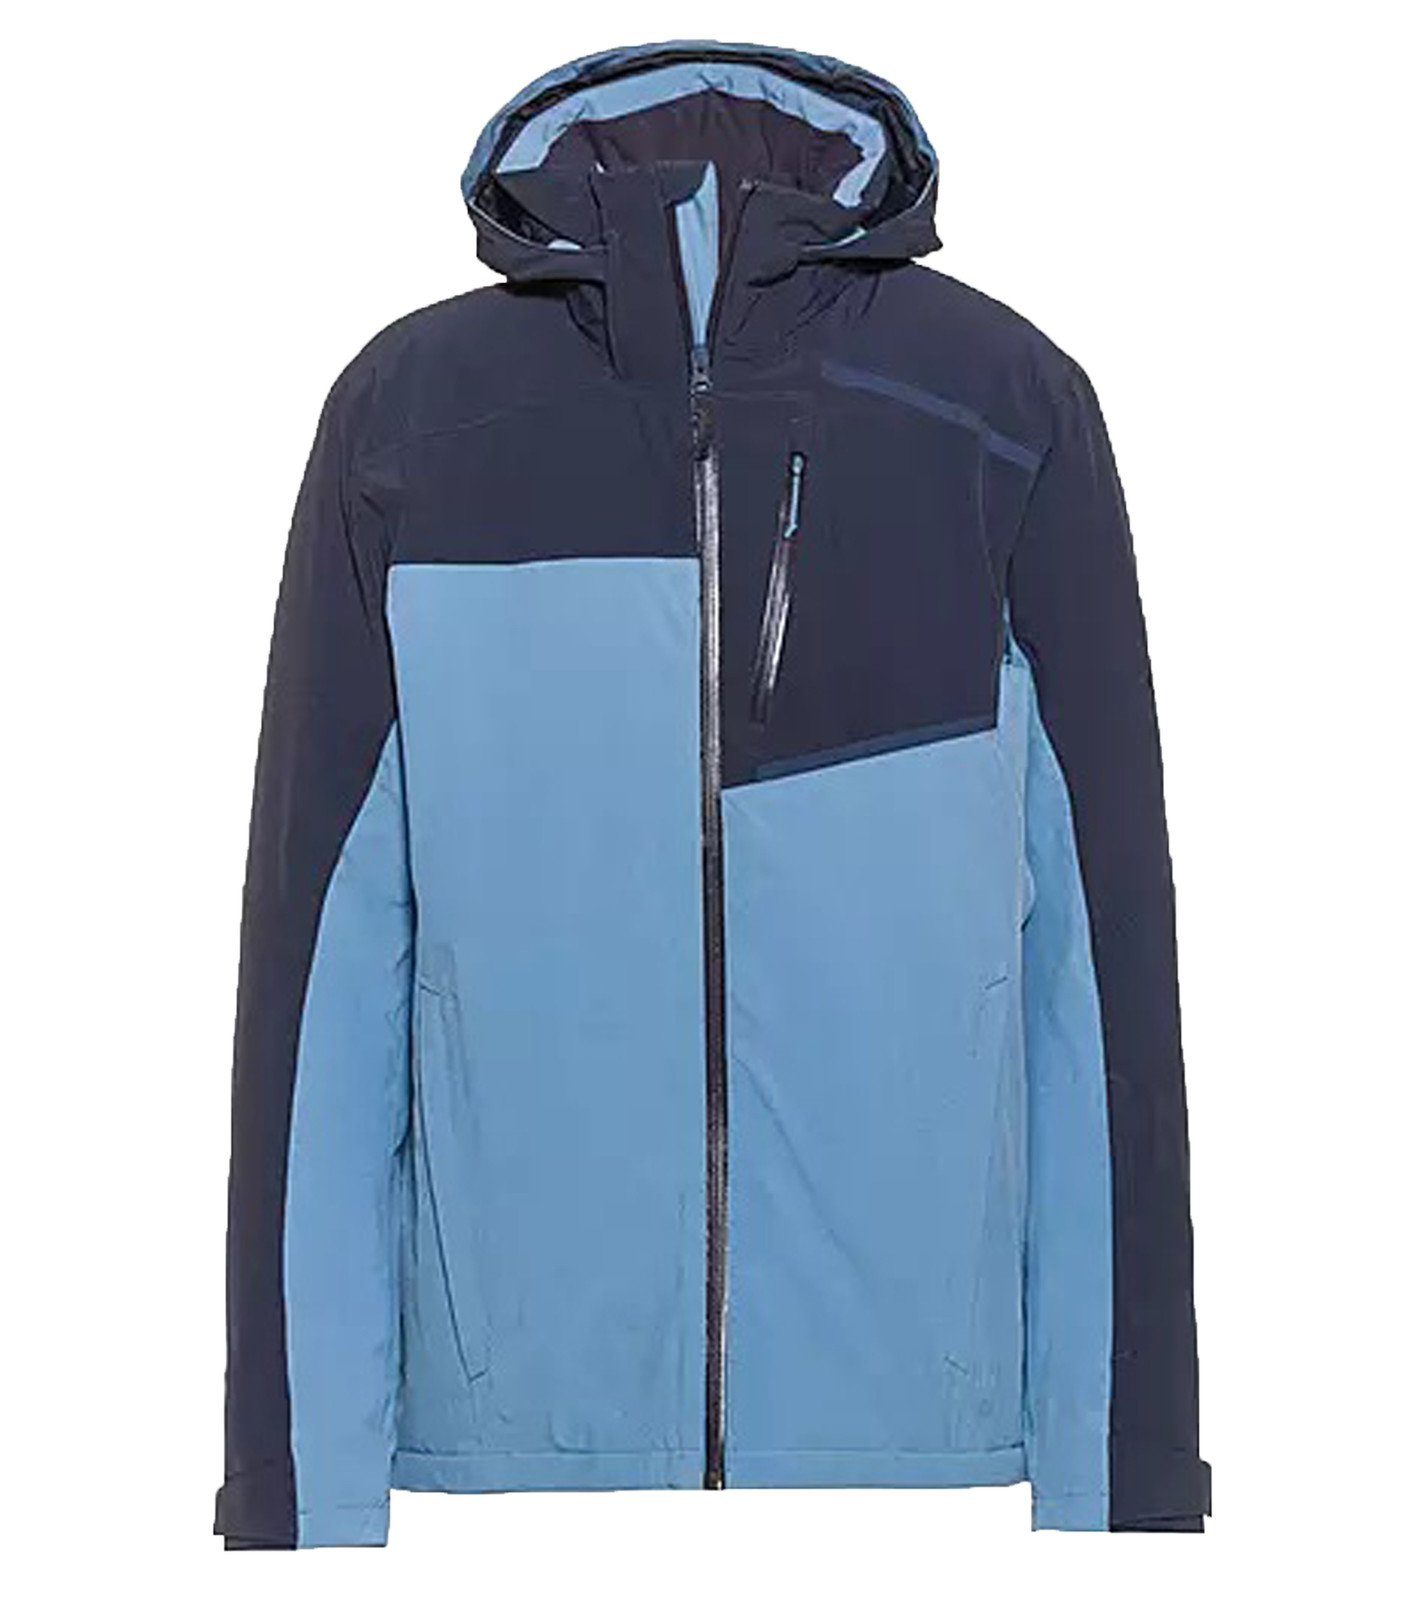 Salomon Skijacke »Salomon Strike Ski-Jacke robuste Winter-Jacke für Herren  Snowboardjacke Schnee-Jacke Blau« online kaufen | OTTO